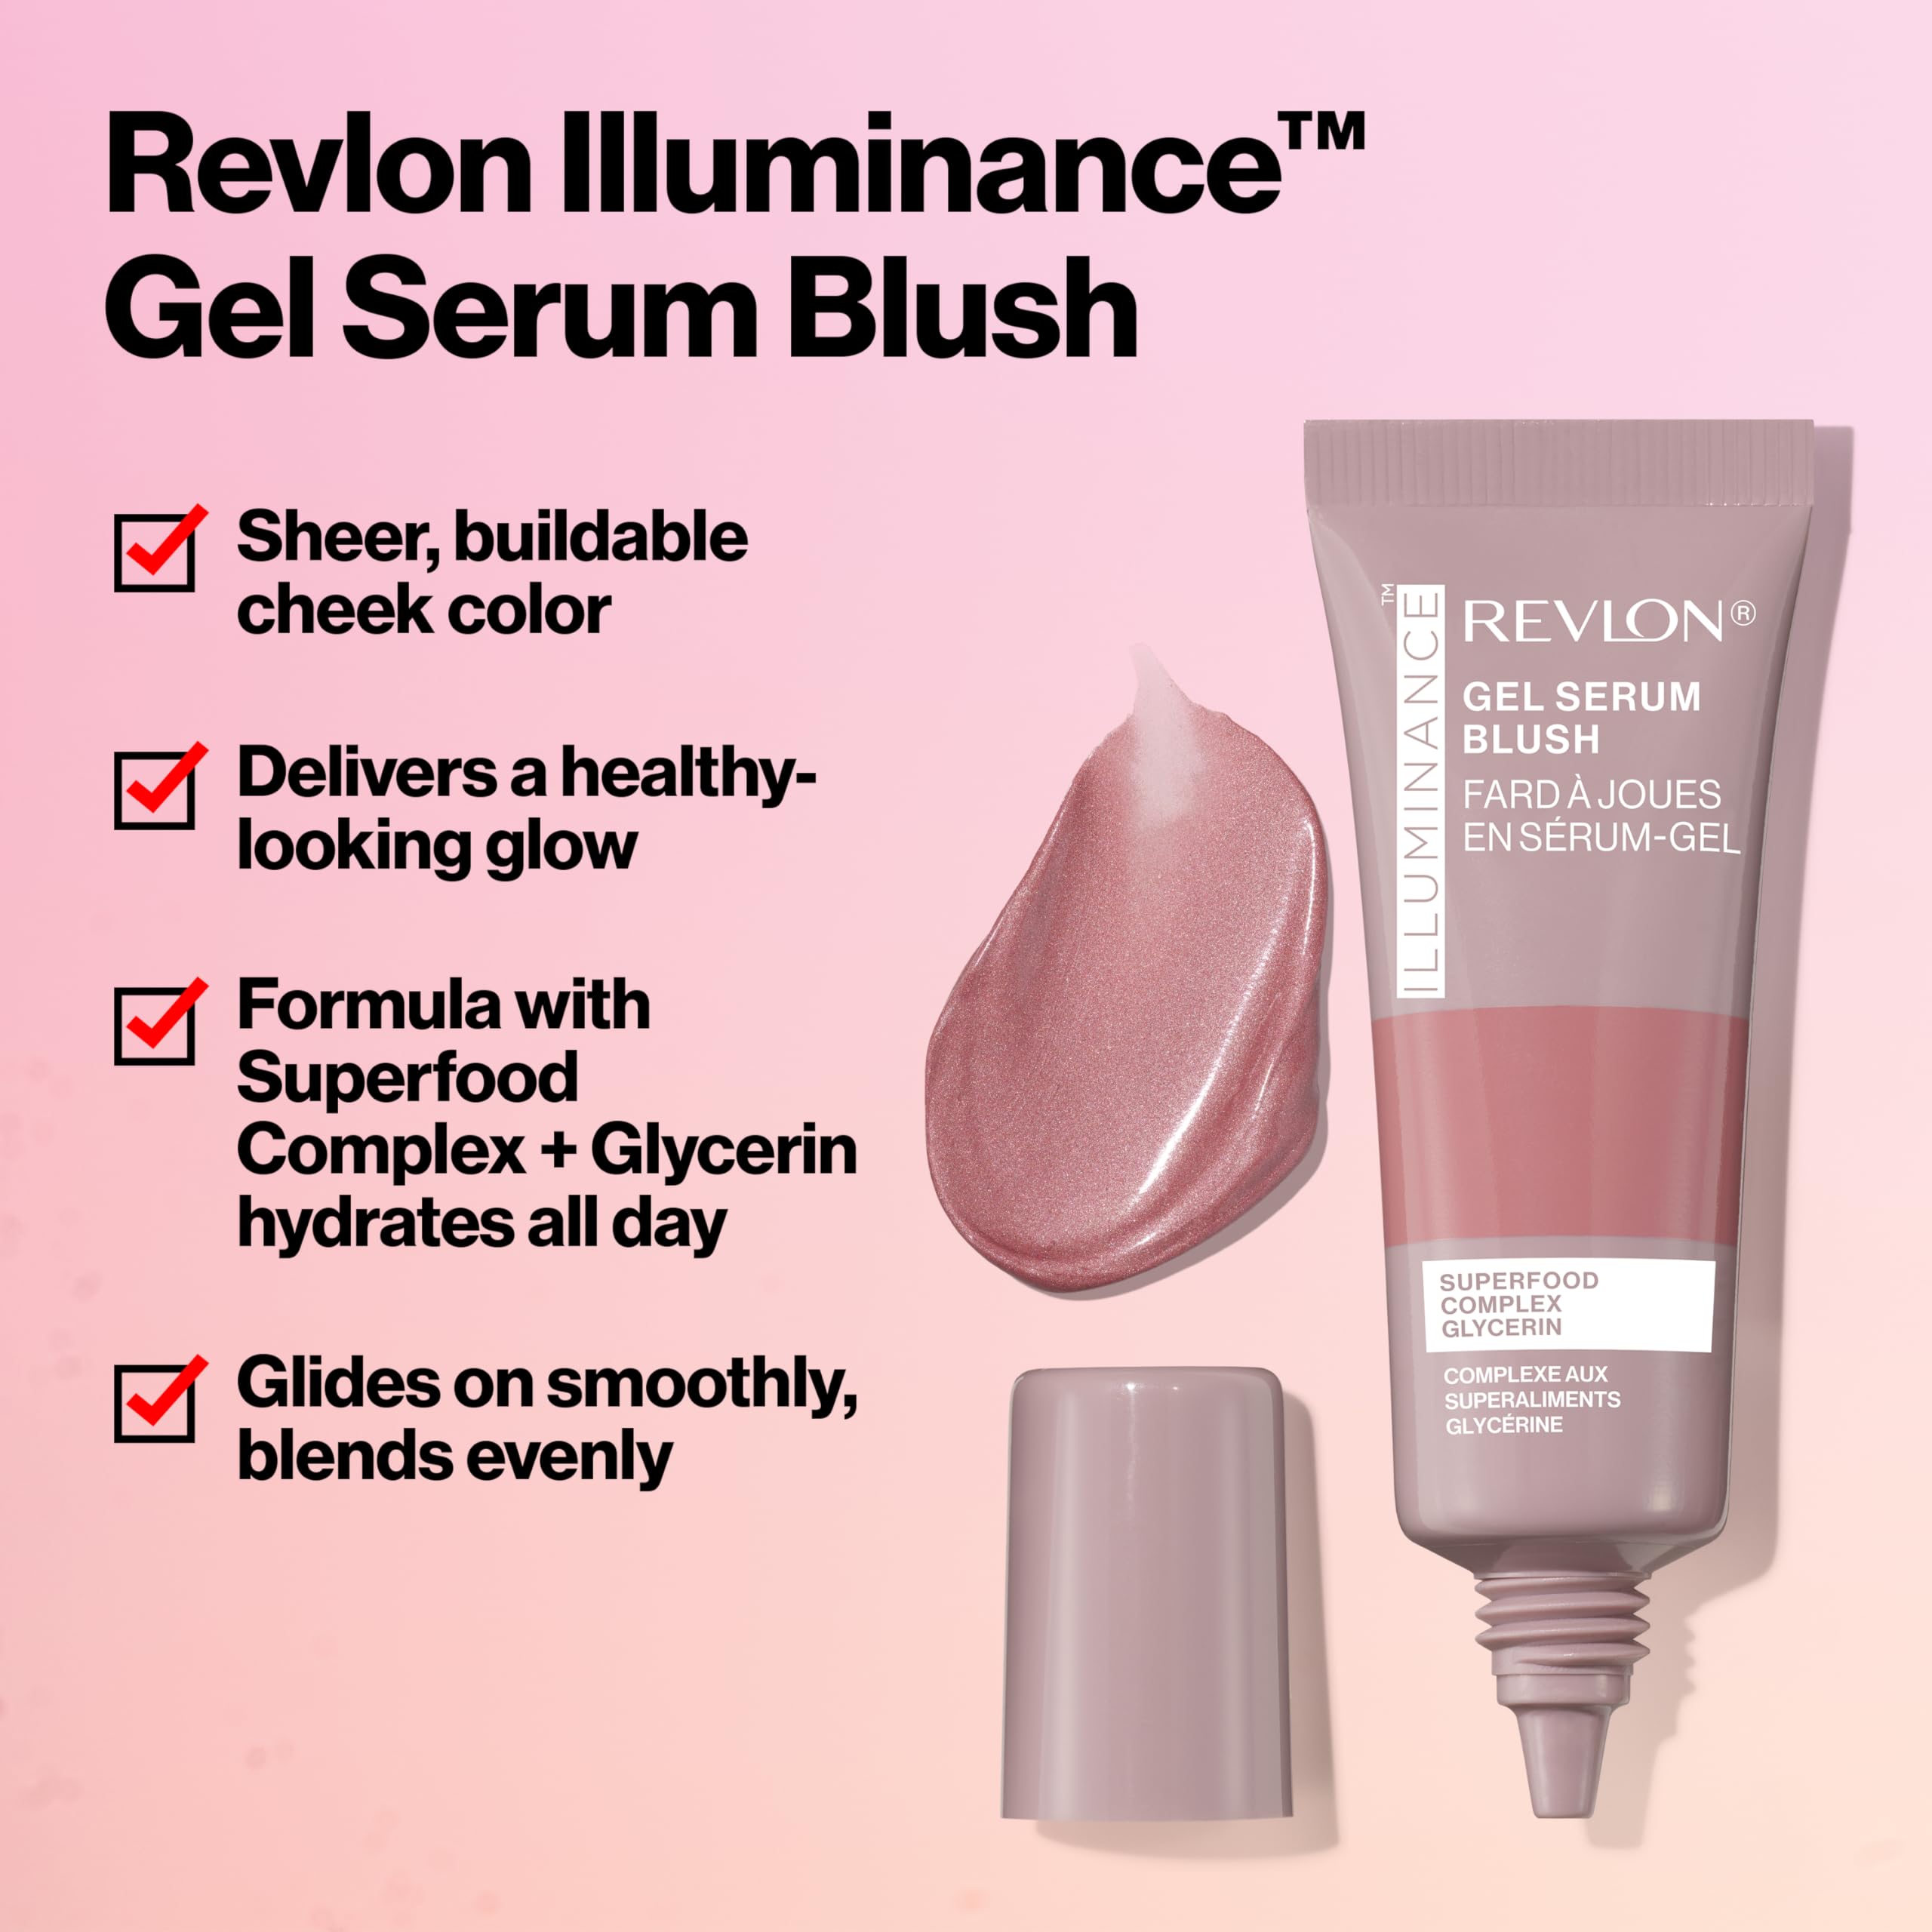 Revlon Illuminance Gel Serum Blush, Visibly Plump Cheeks, Dewy Finish and Hydrates All Day, 120 Striking Rose, 0.37 fl oz.